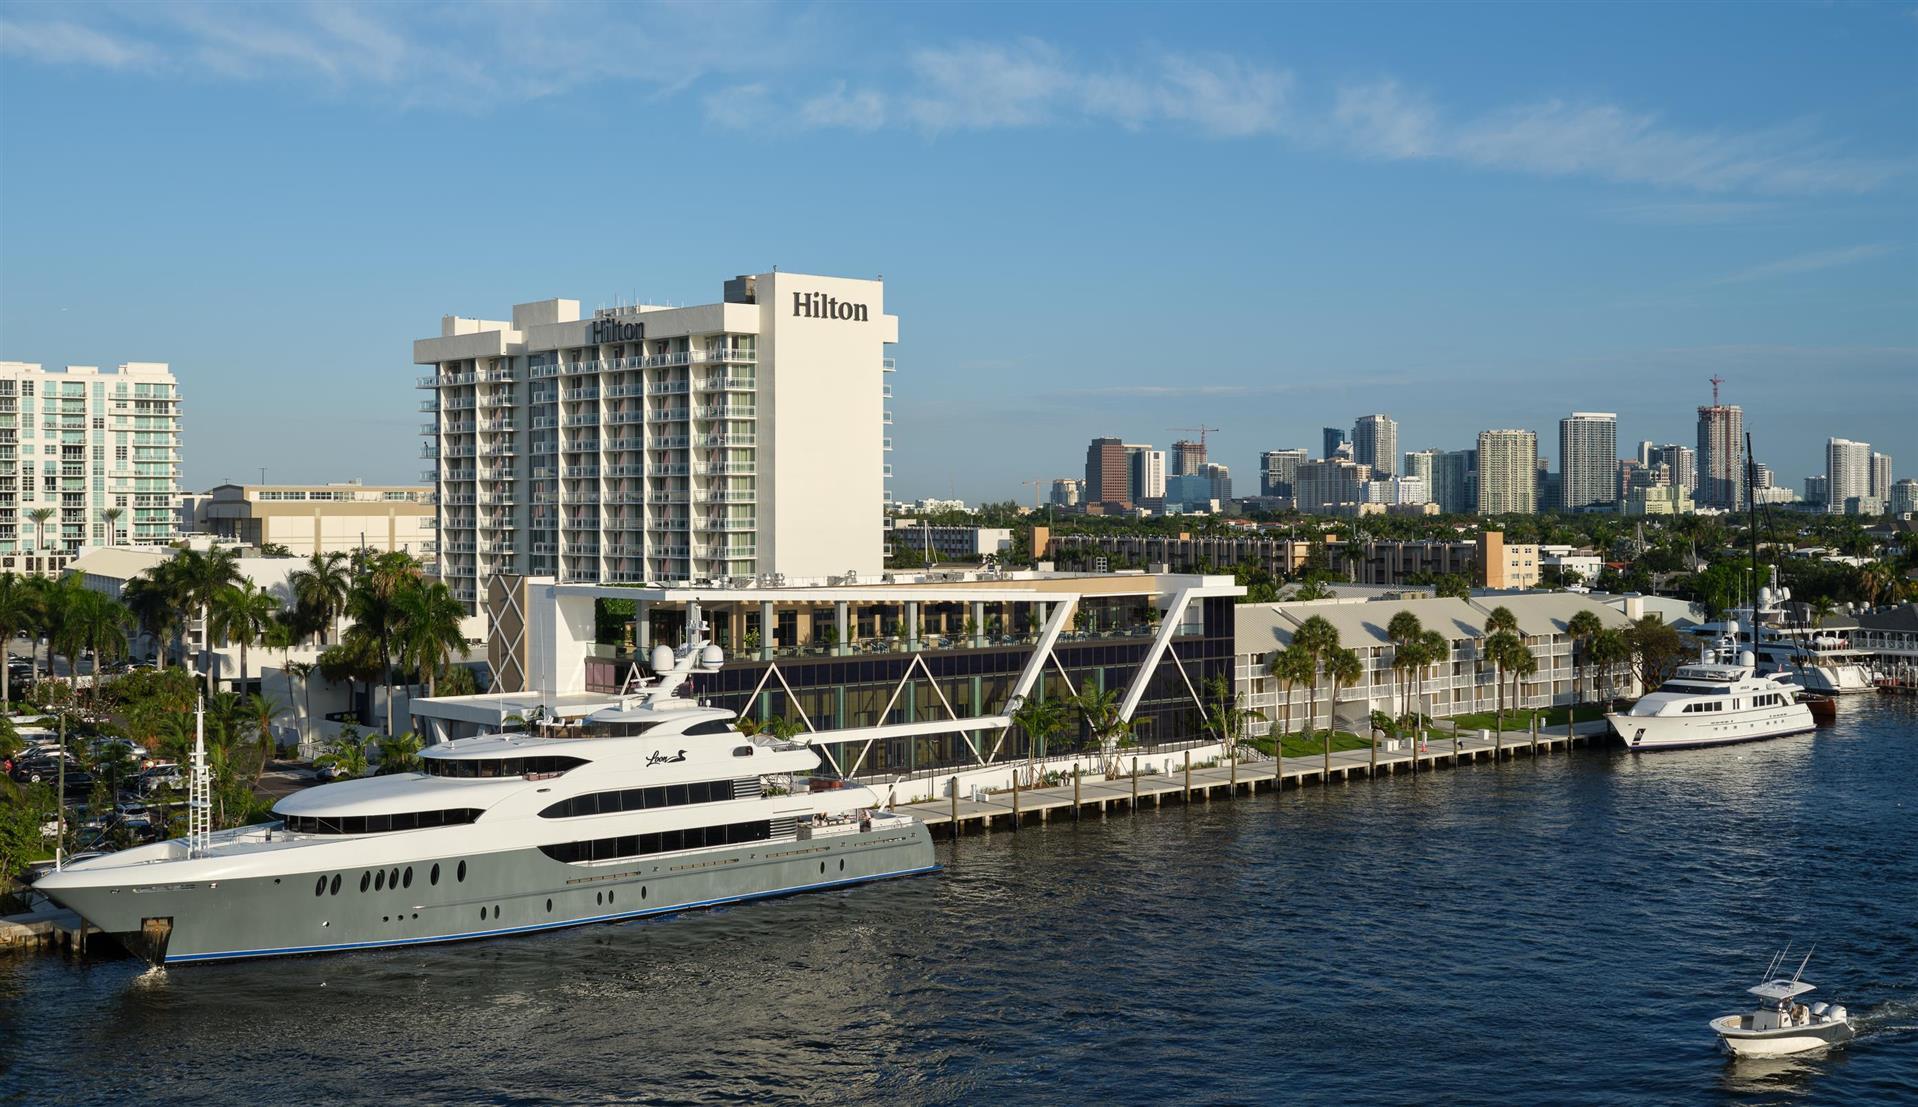 Hilton Fort Lauderdale Marina in Fort Lauderdale, FL